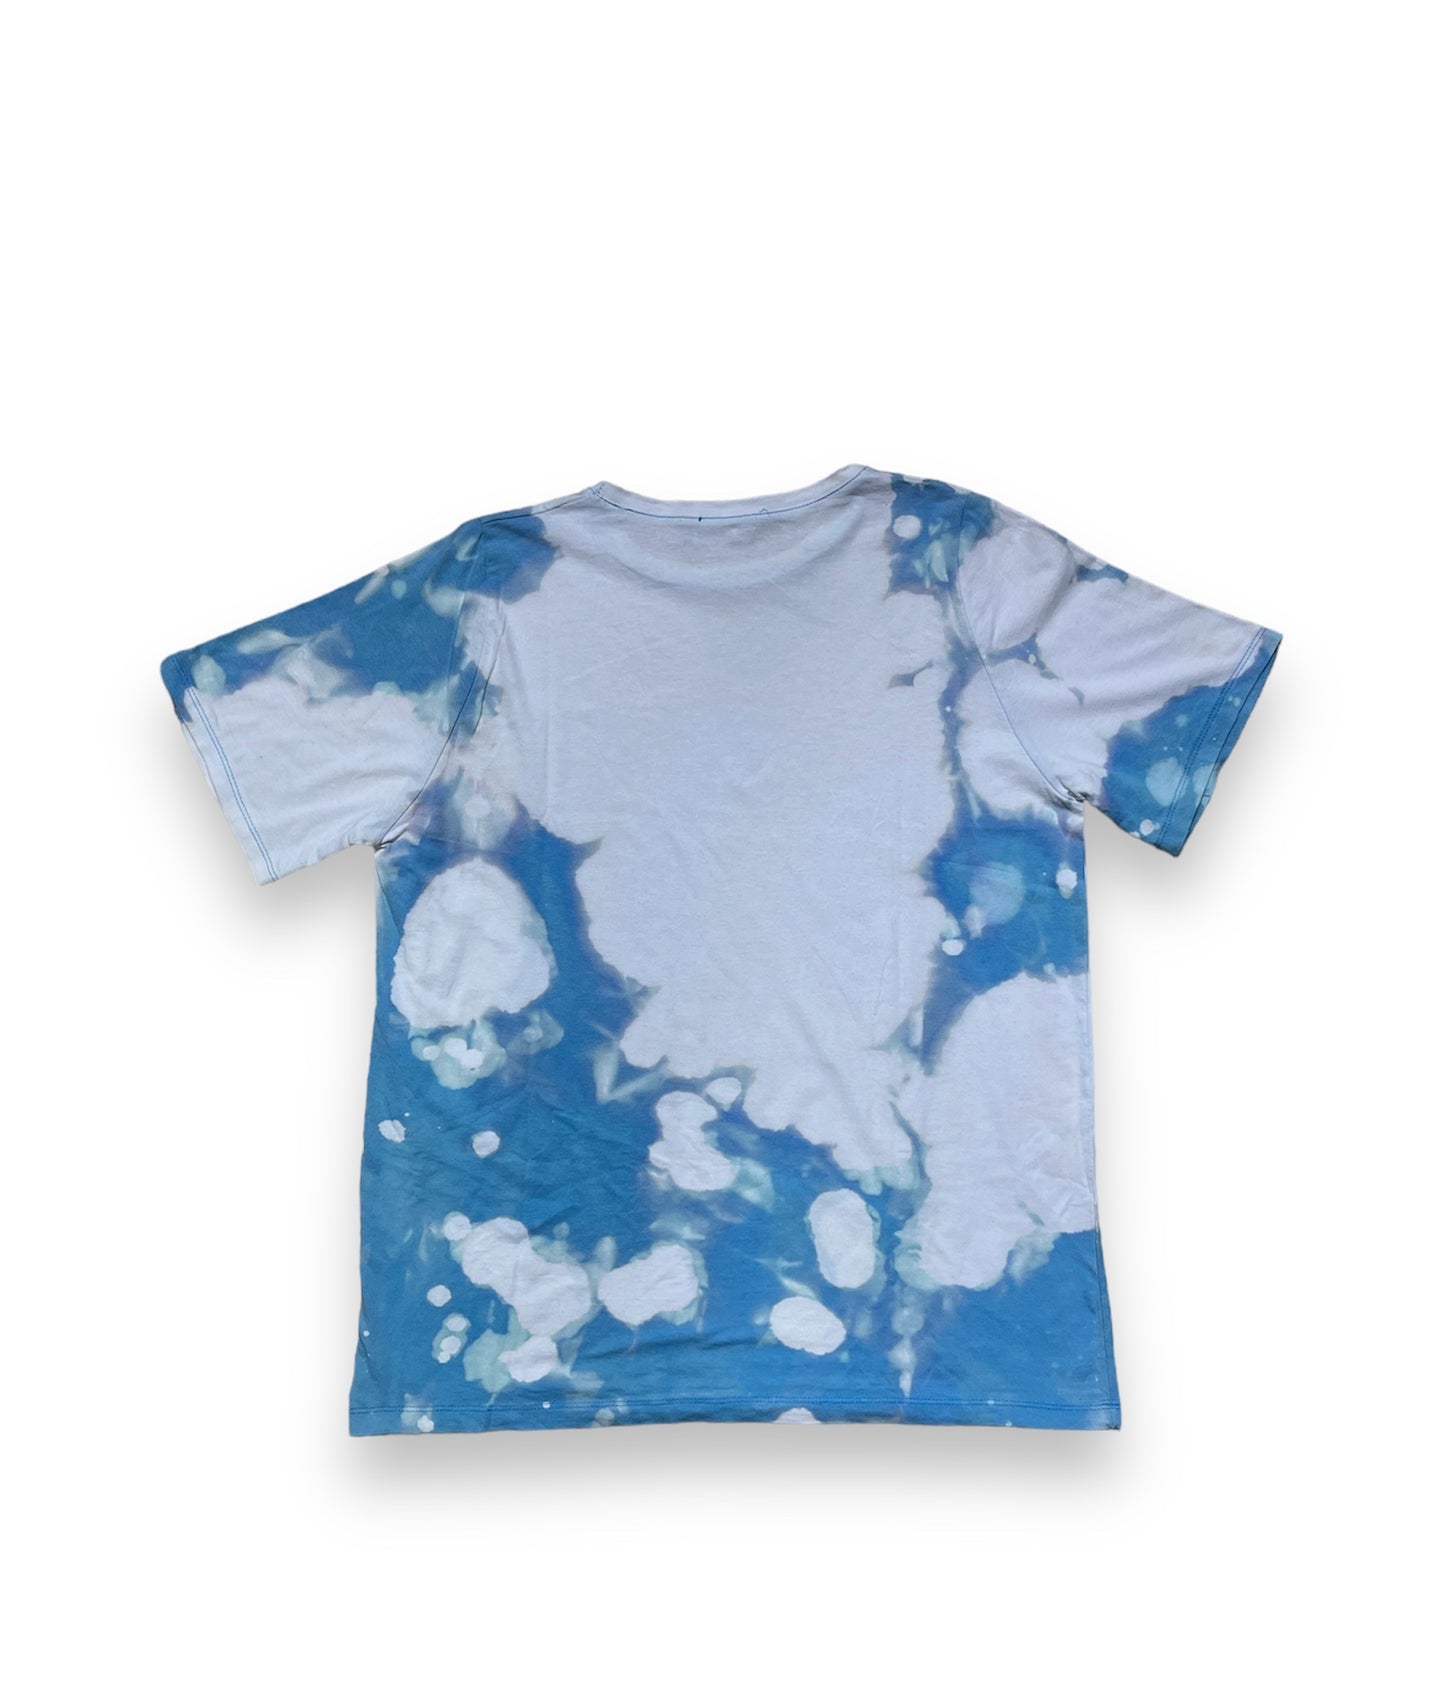 light blue wash out t-shirt